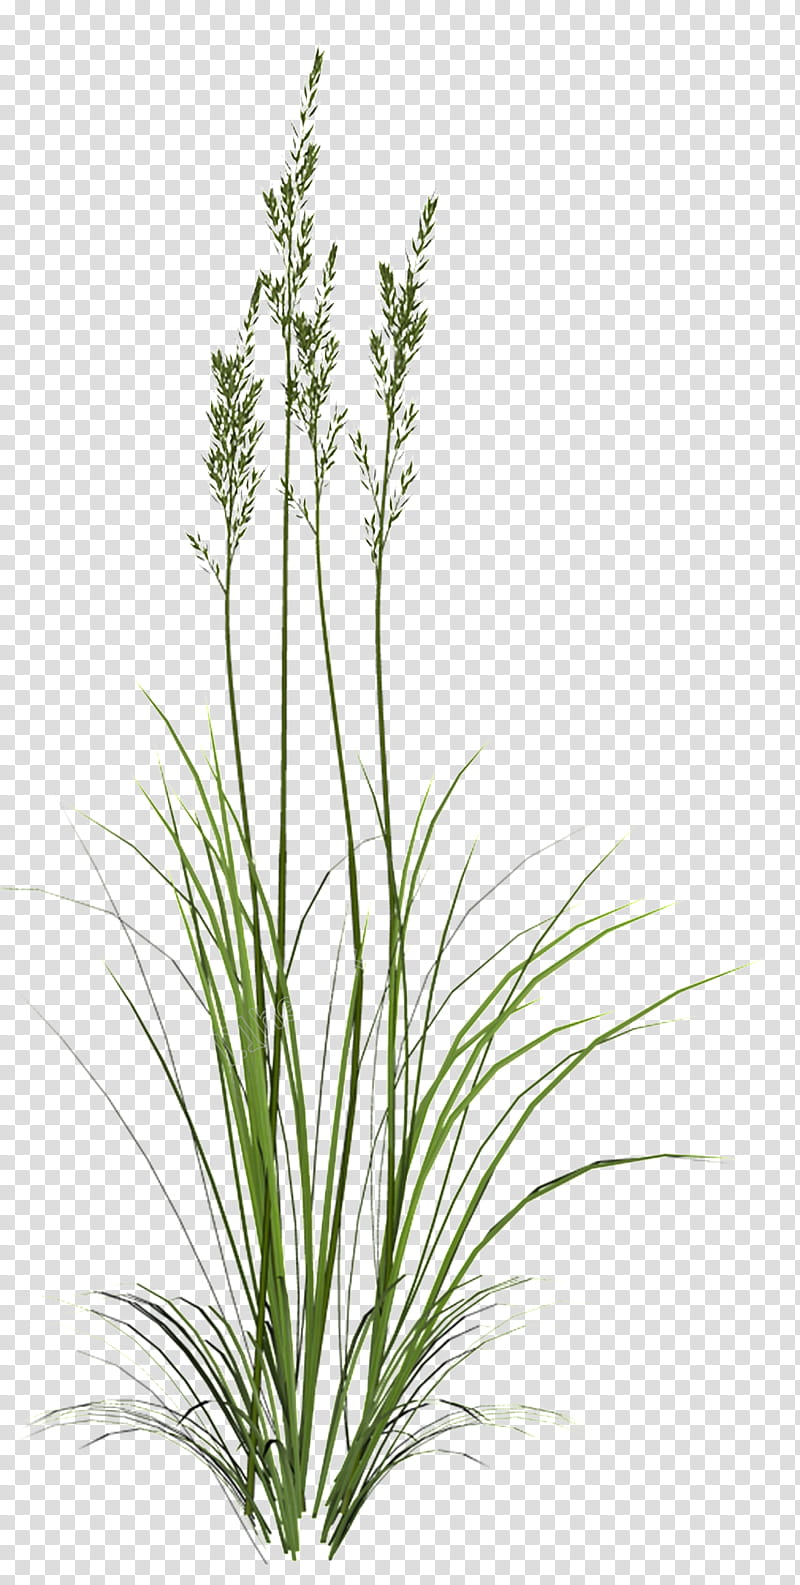 Grass, Herbaceous Plant, Plants, 3D Computer Graphics, Shrub, Grasses, Flower, Grass Family transparent background PNG clipart